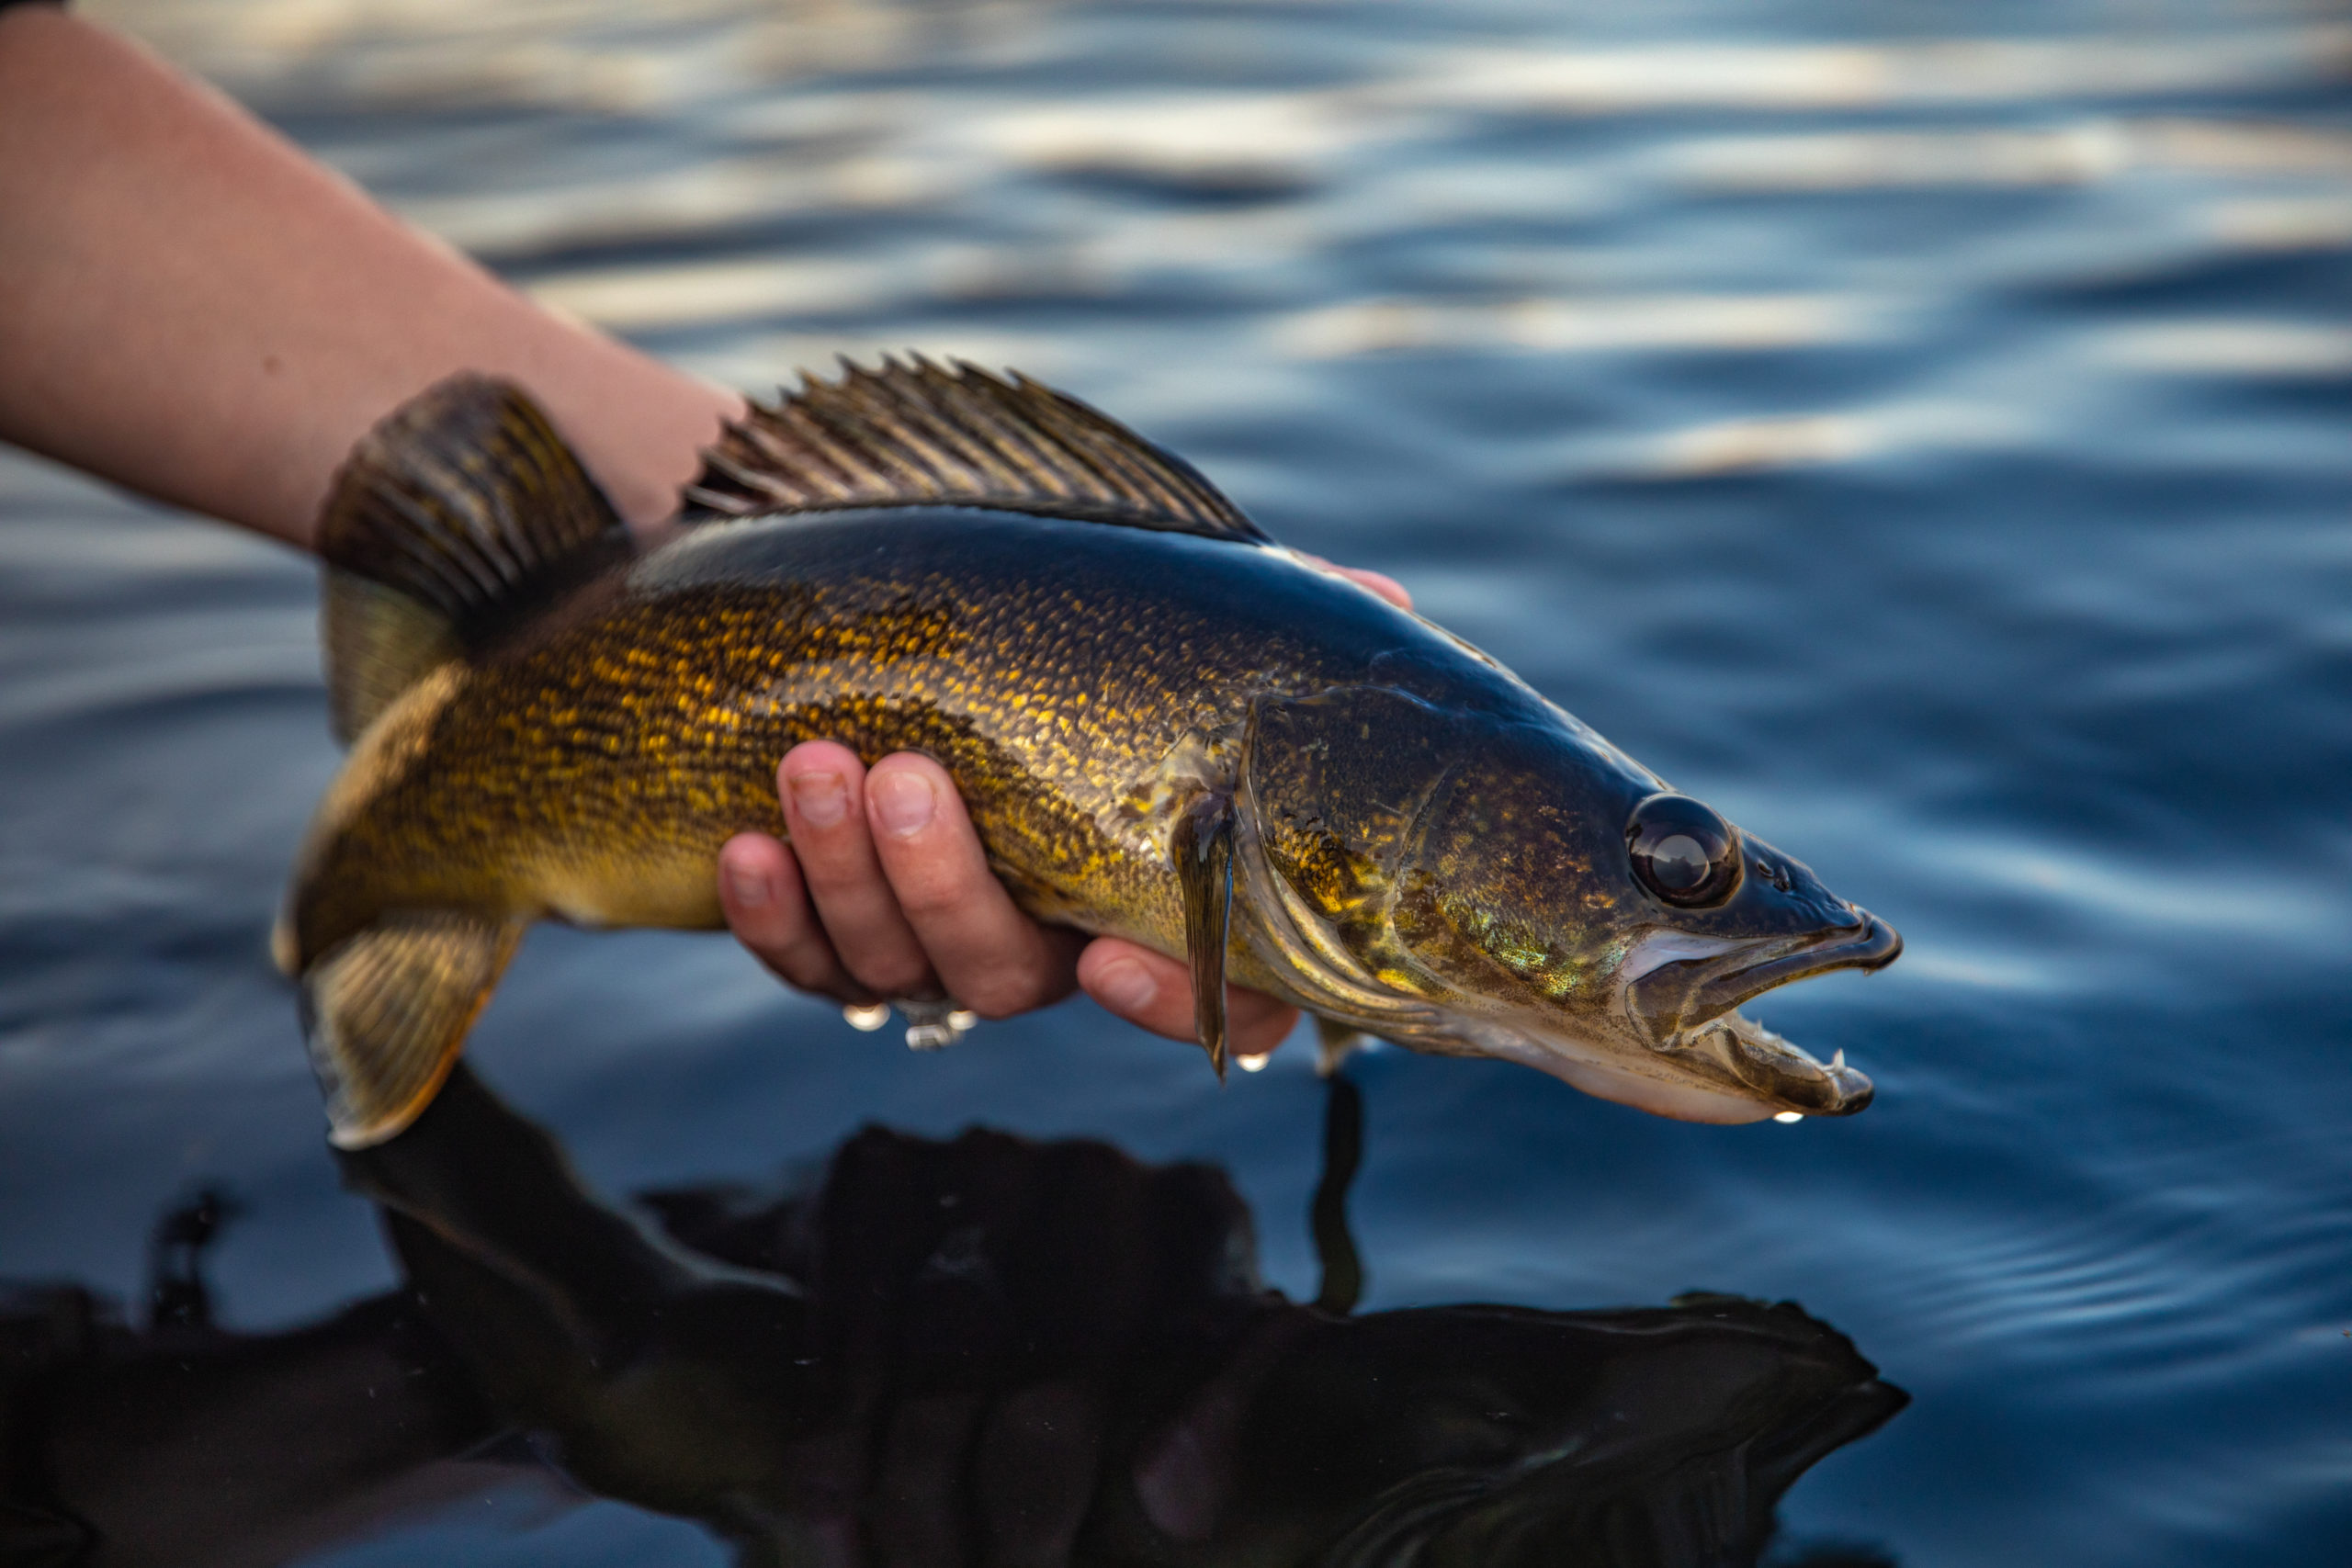 Wyoming Game and Fish stocks over 6.5 million fish in 2021; Casper’s Dan Speas Fish Hatchery expanding to raise walleye